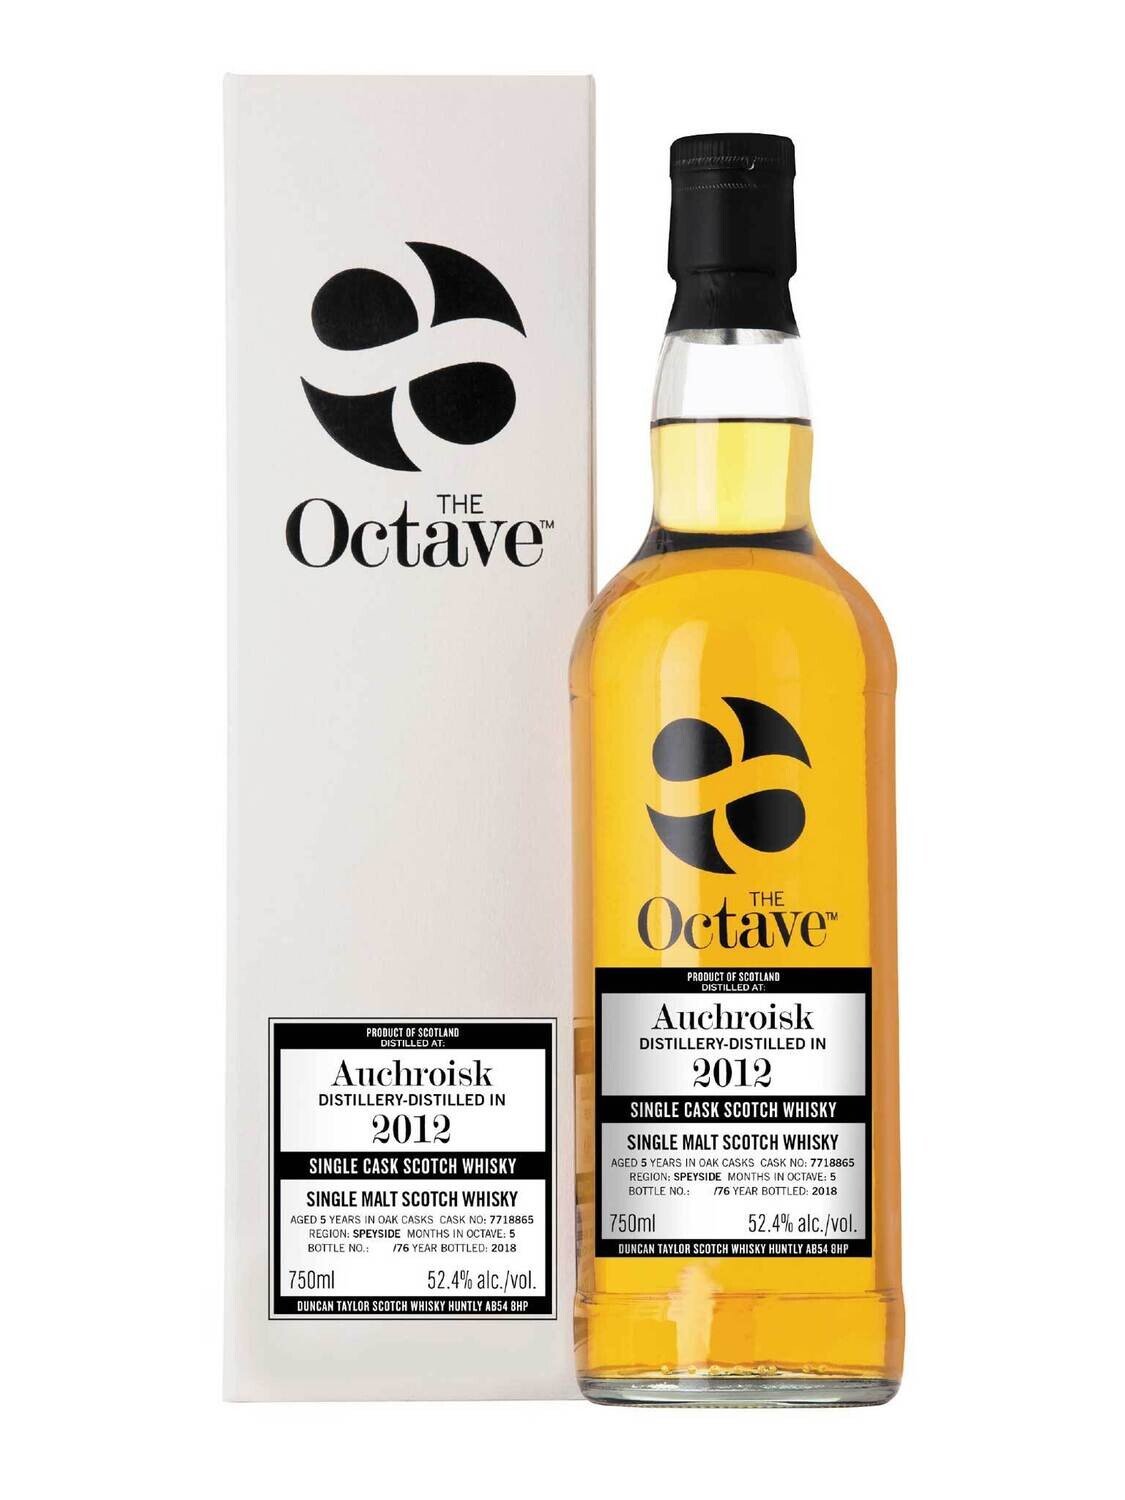 Octave Auchroisk 2012 5 Year Old Single Malt Scotch Whisky Cask #7718865 52.4% ABV 750mL